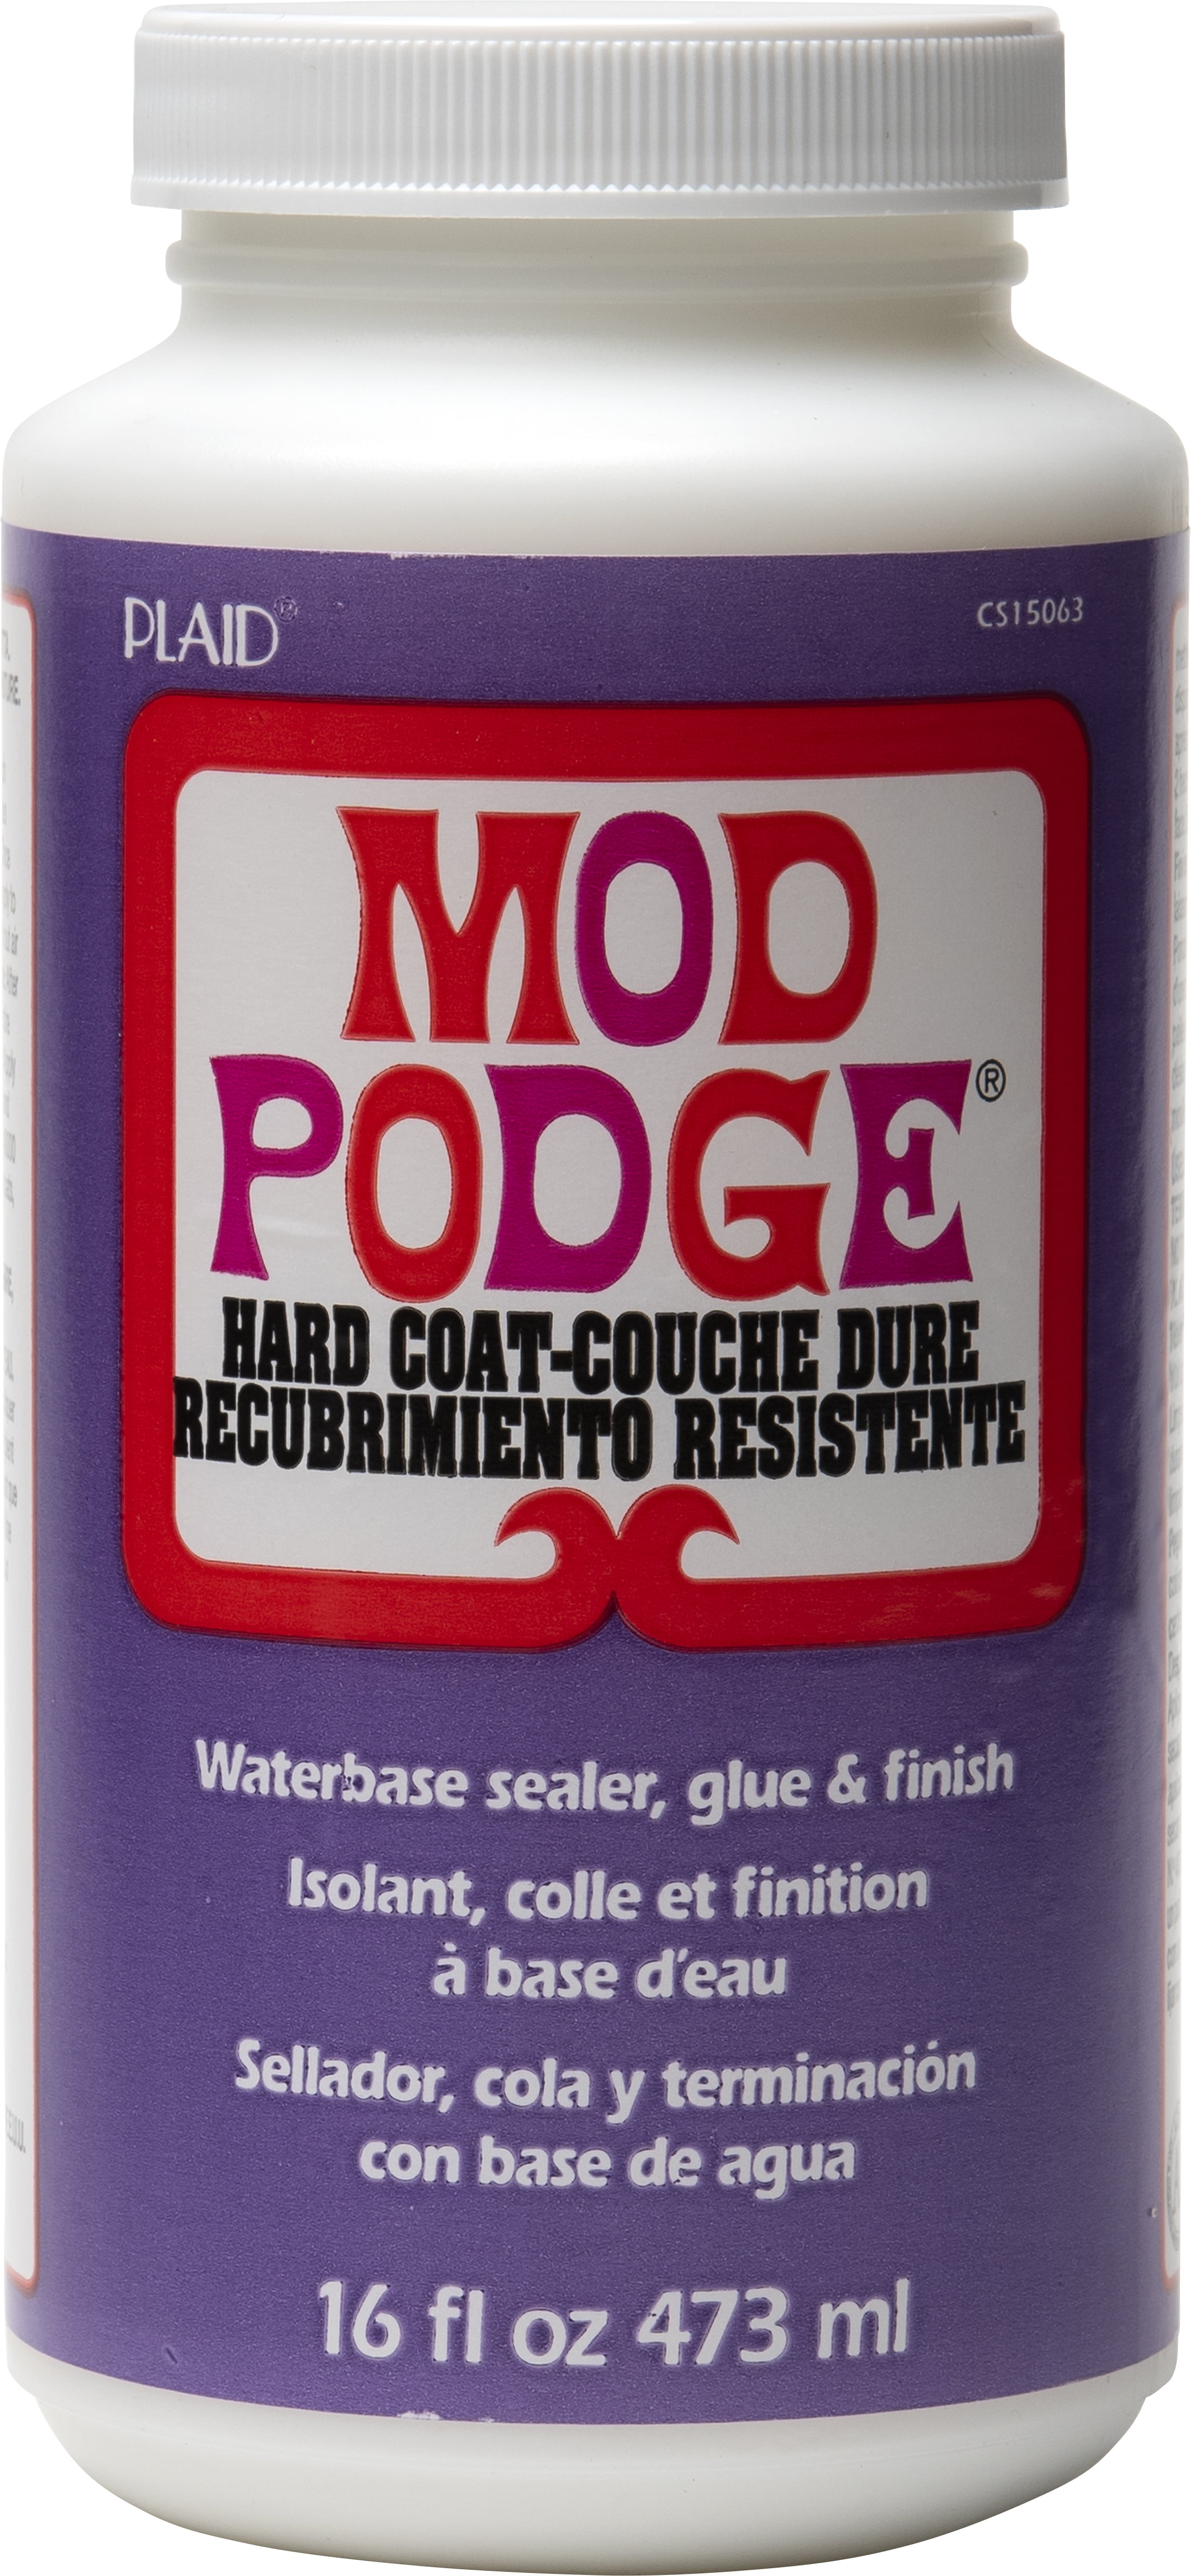 Mod Podge CS11223 Puzzle Saver Glue, Sealer, and Finish, Clear, 4 fl oz 